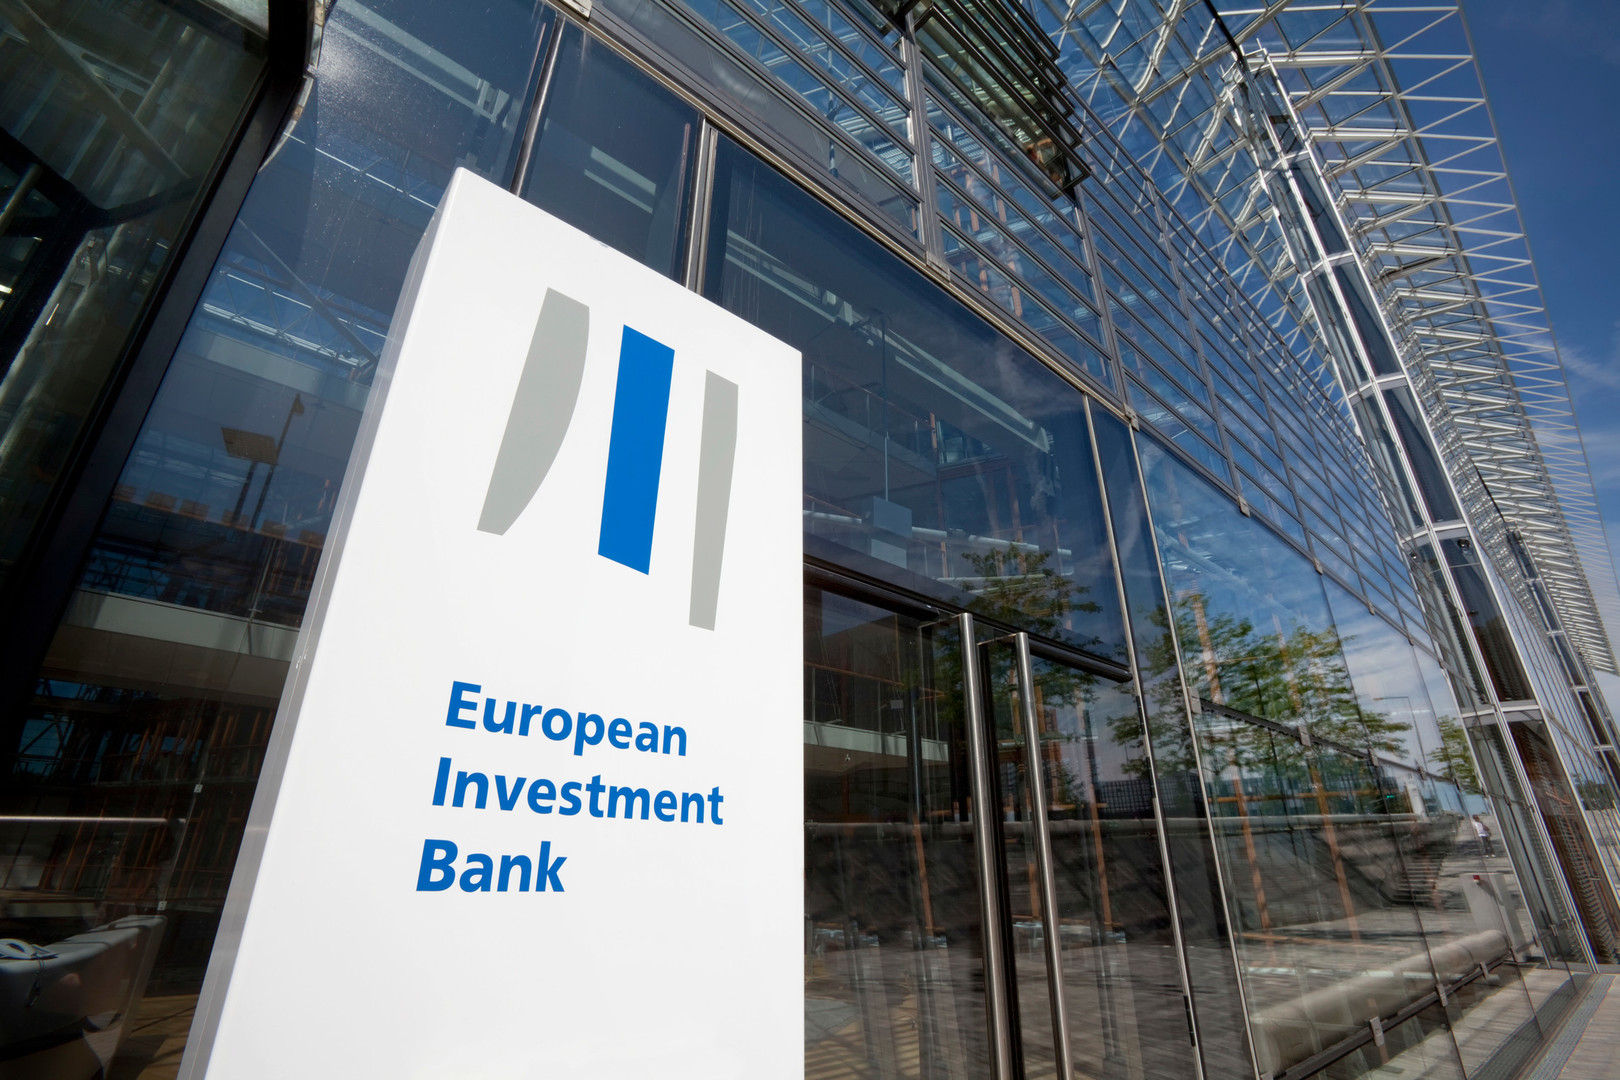 European Investment Bank plans to sell bonds via blockchain